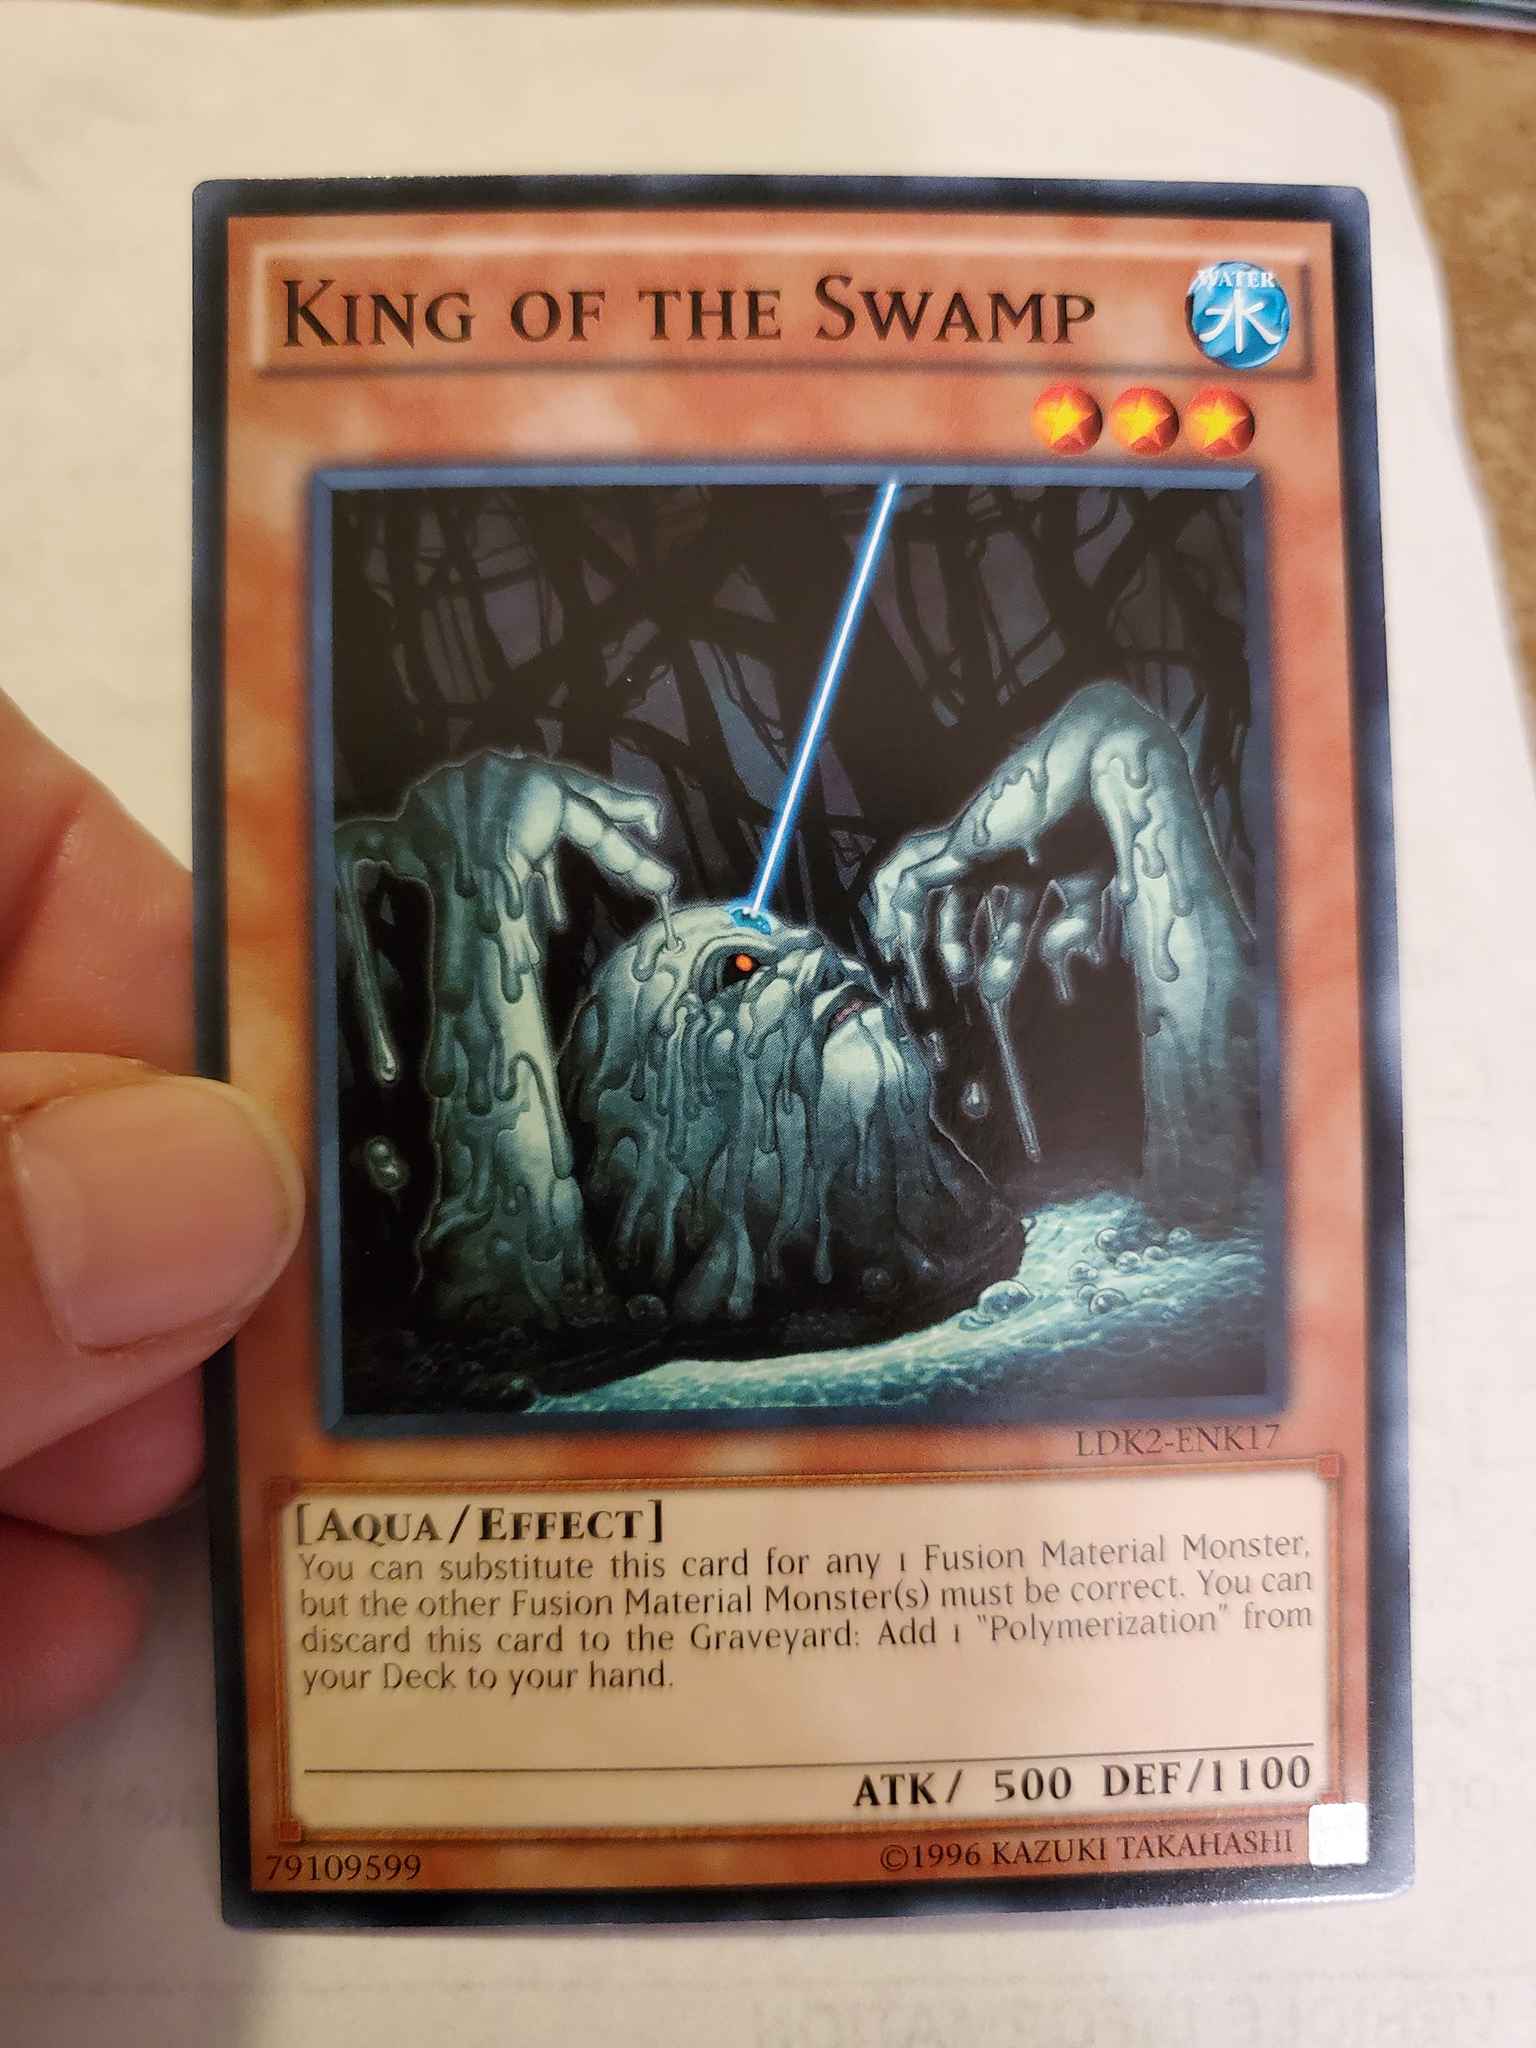 LDK2-ENK17 King of the Swamp UNL edition Mint YuGiOh Card NM